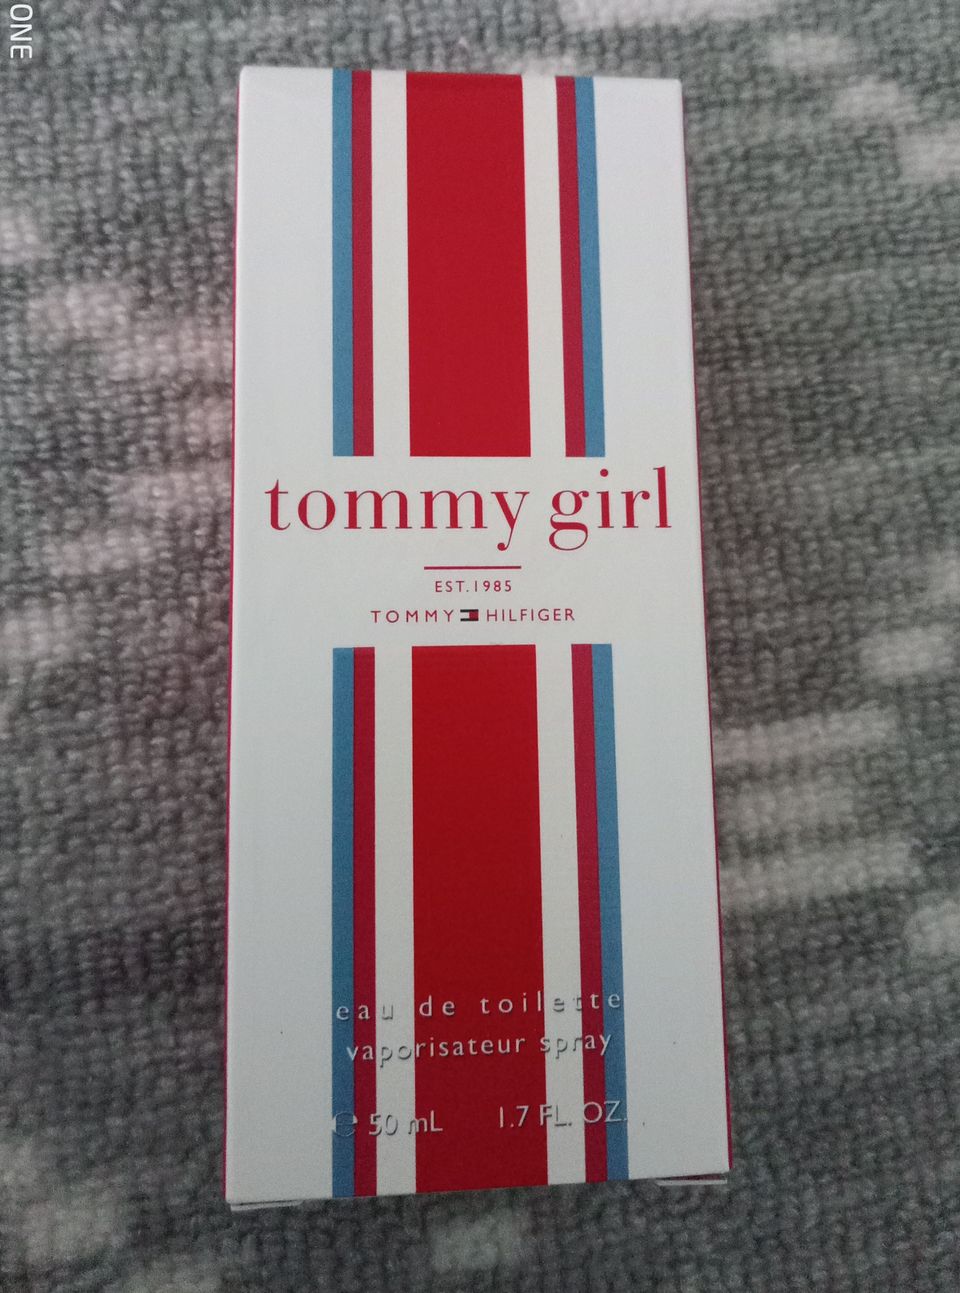 UUSI Tommy girl Hilfiger toilette